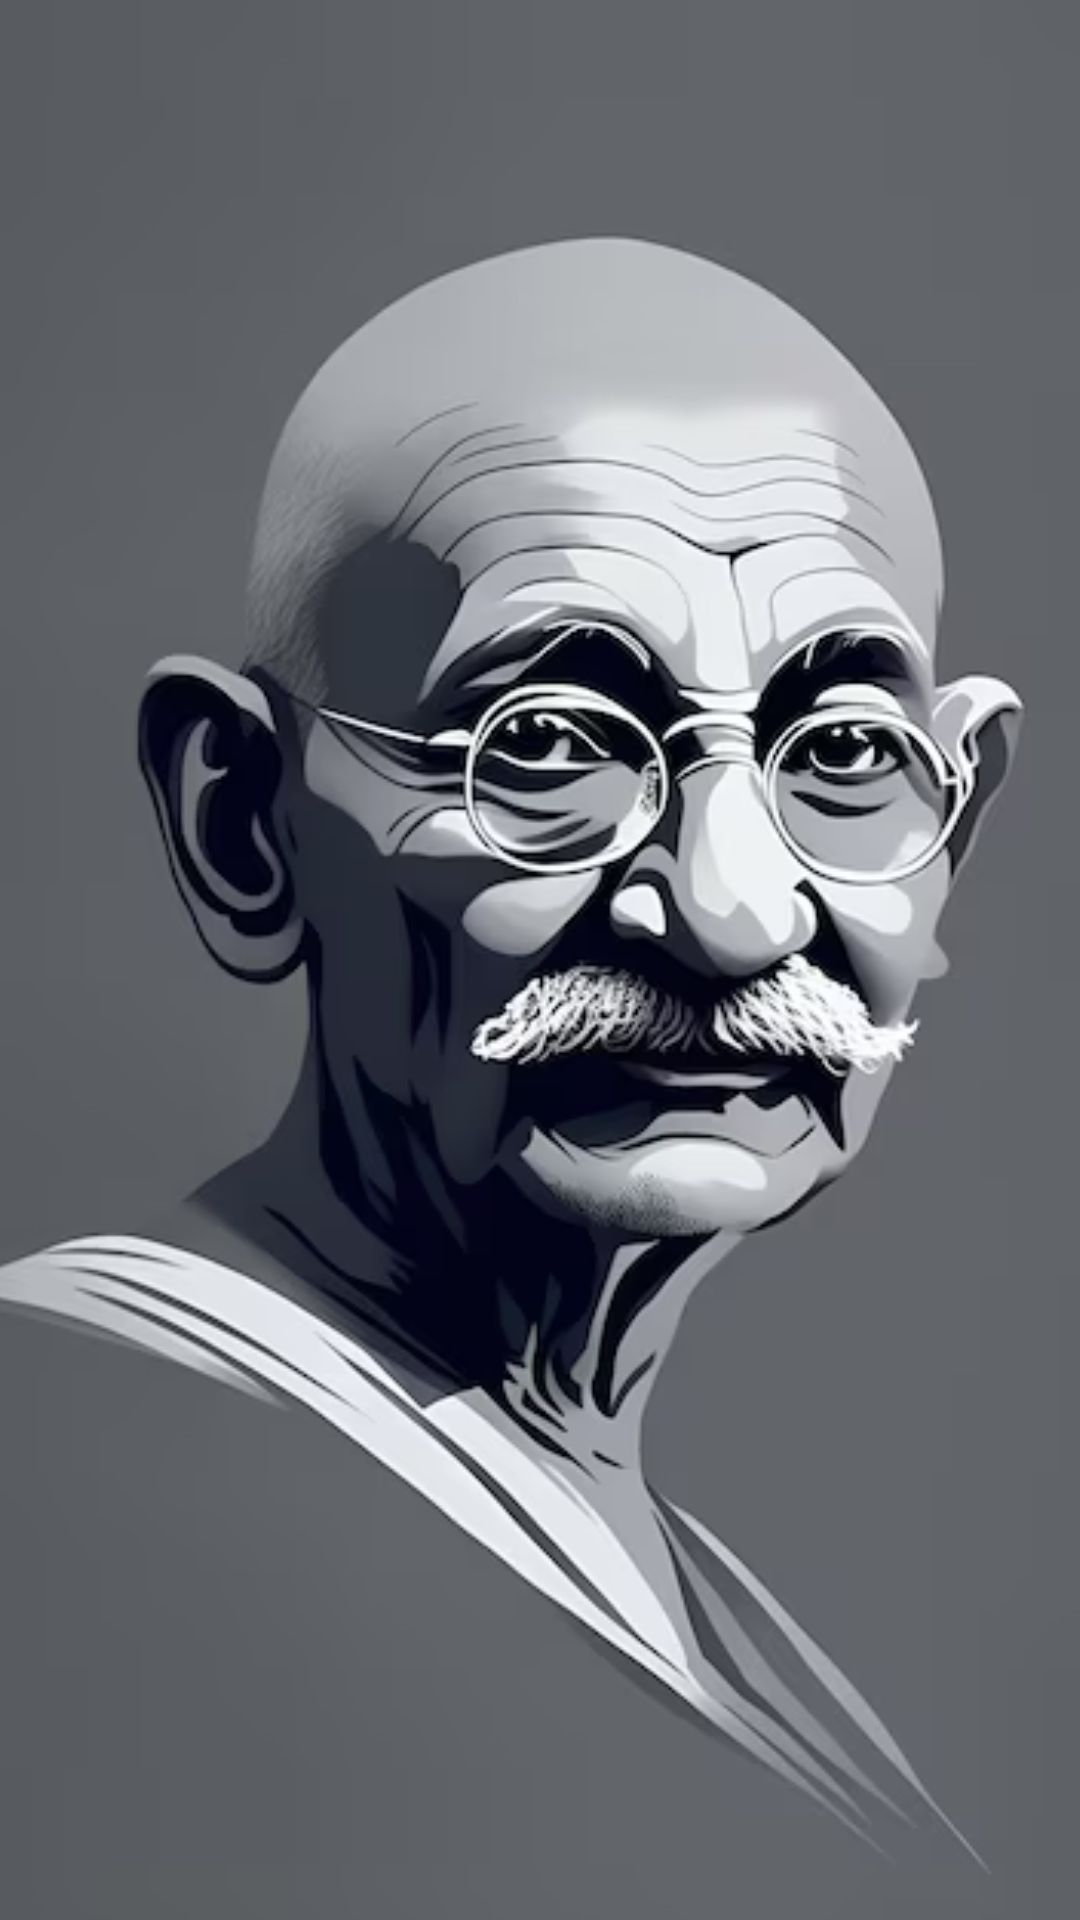 Top 9 Books written by Mahatma Gandhi one should read